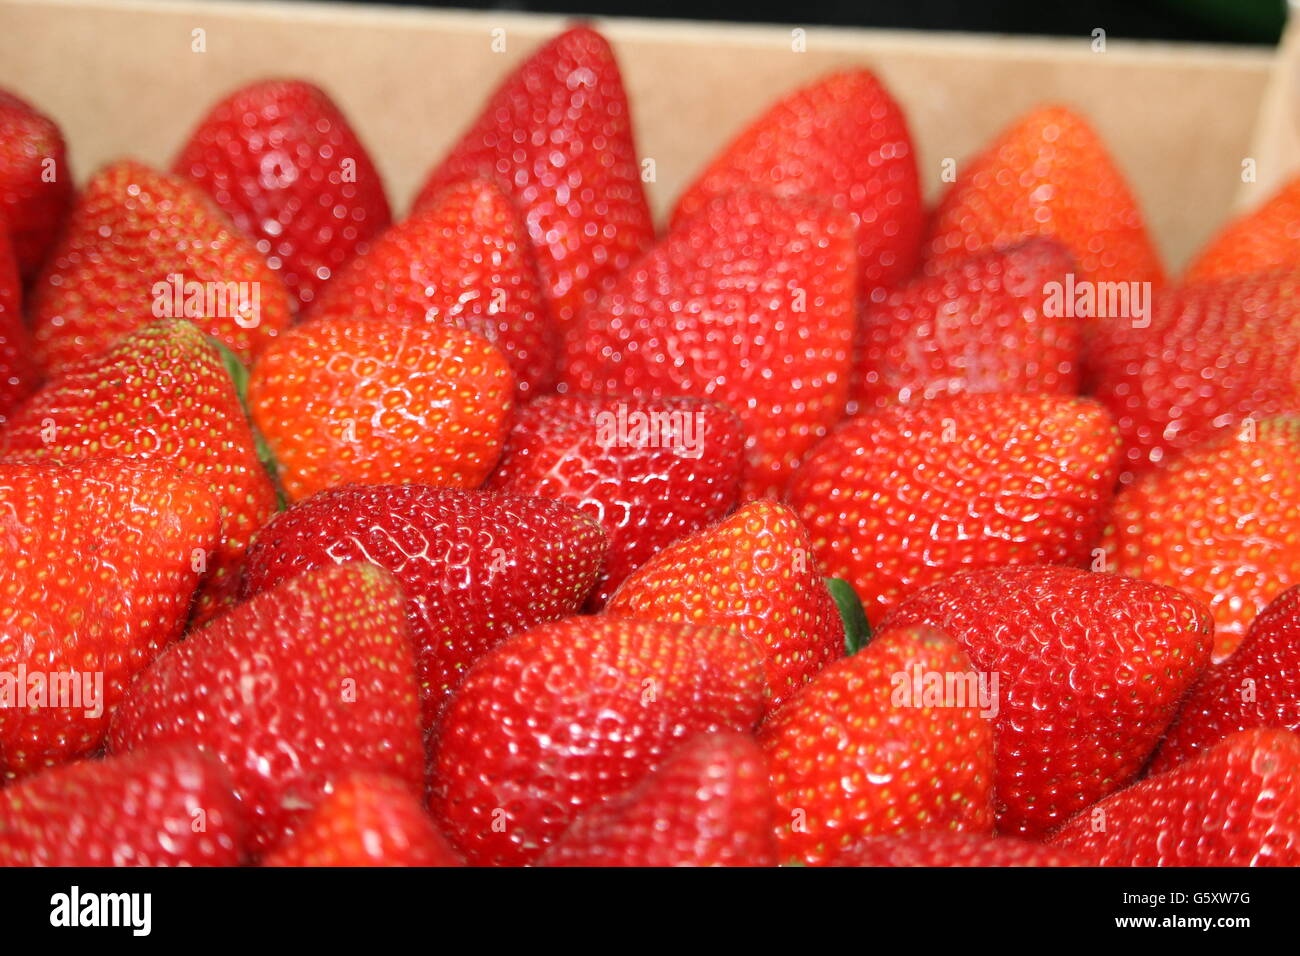 Erdbeeren, gesunden Sommer essen, gesunde Ernährung, Wimbledon, Gewichtsreduktion, Ernährung Stockfoto